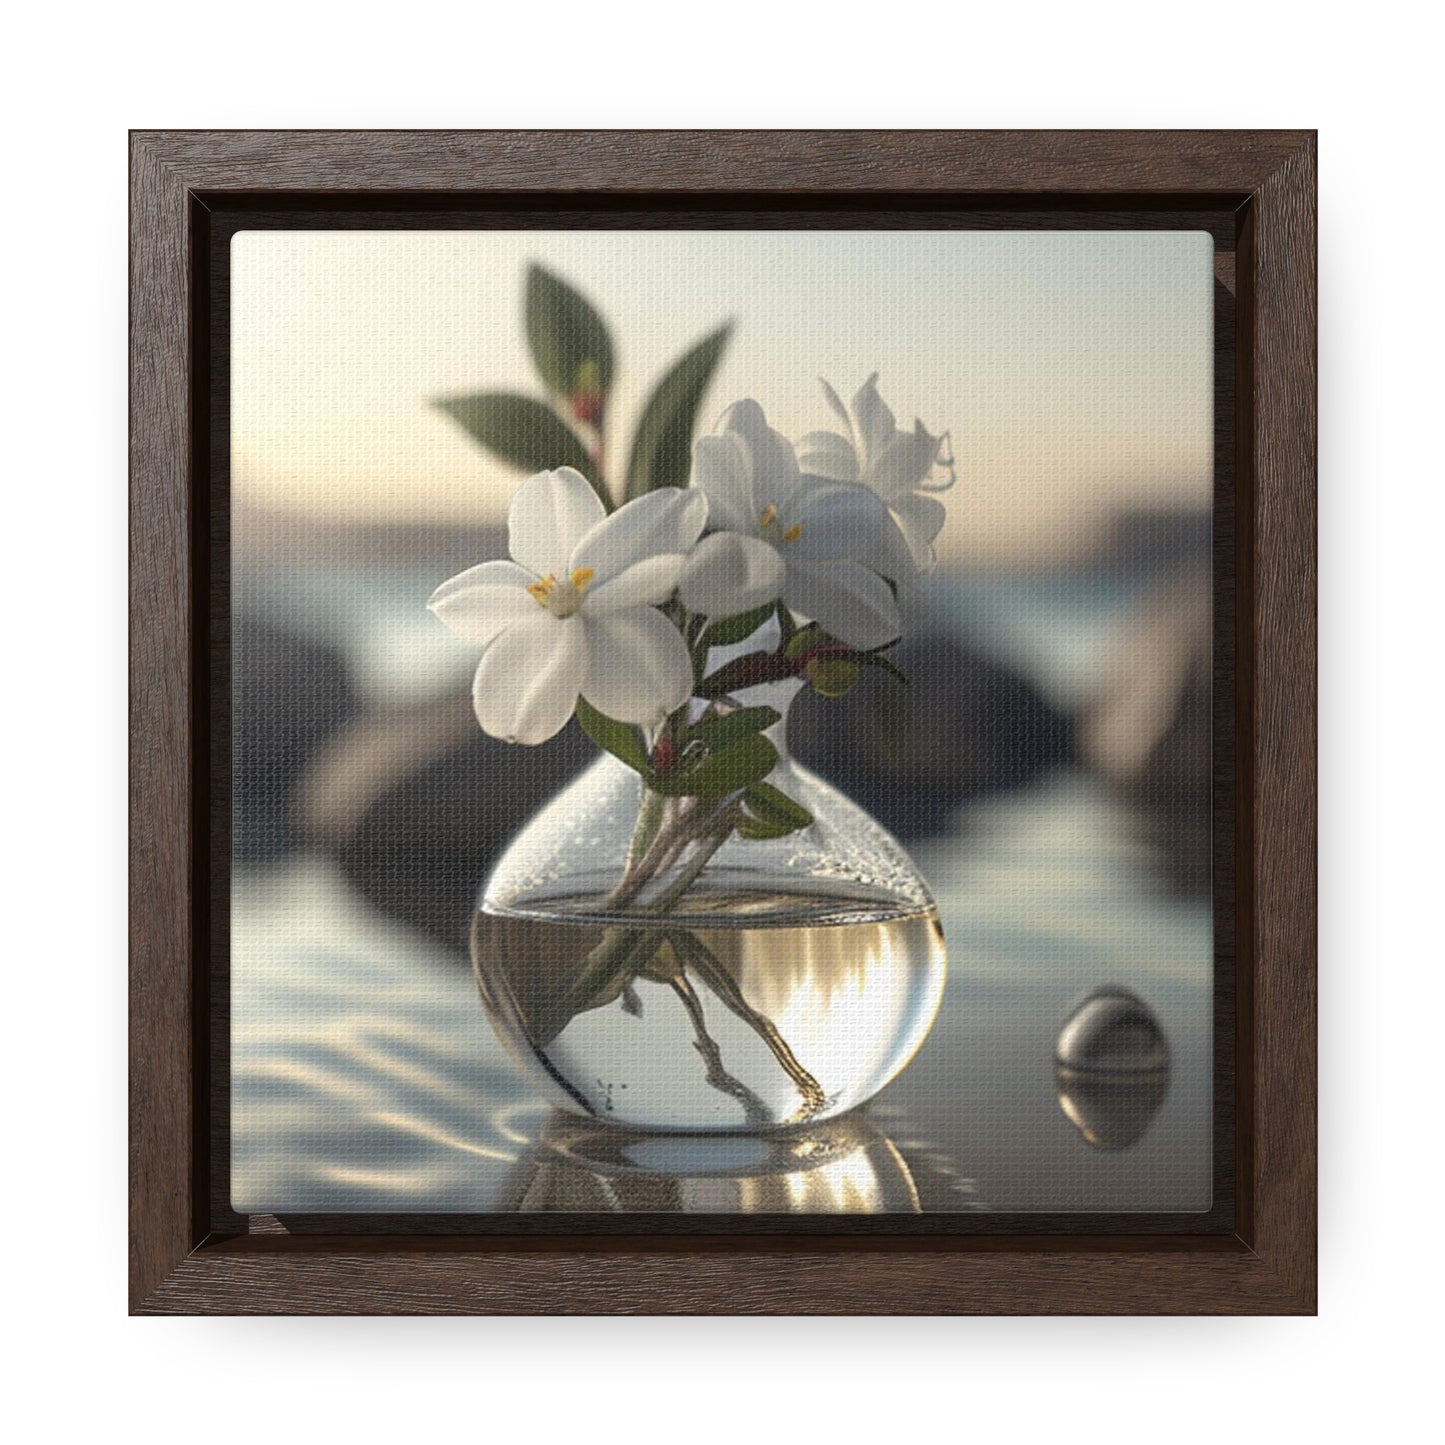 Gallery Canvas Wraps, Square Frame Jasmine glass vase 1